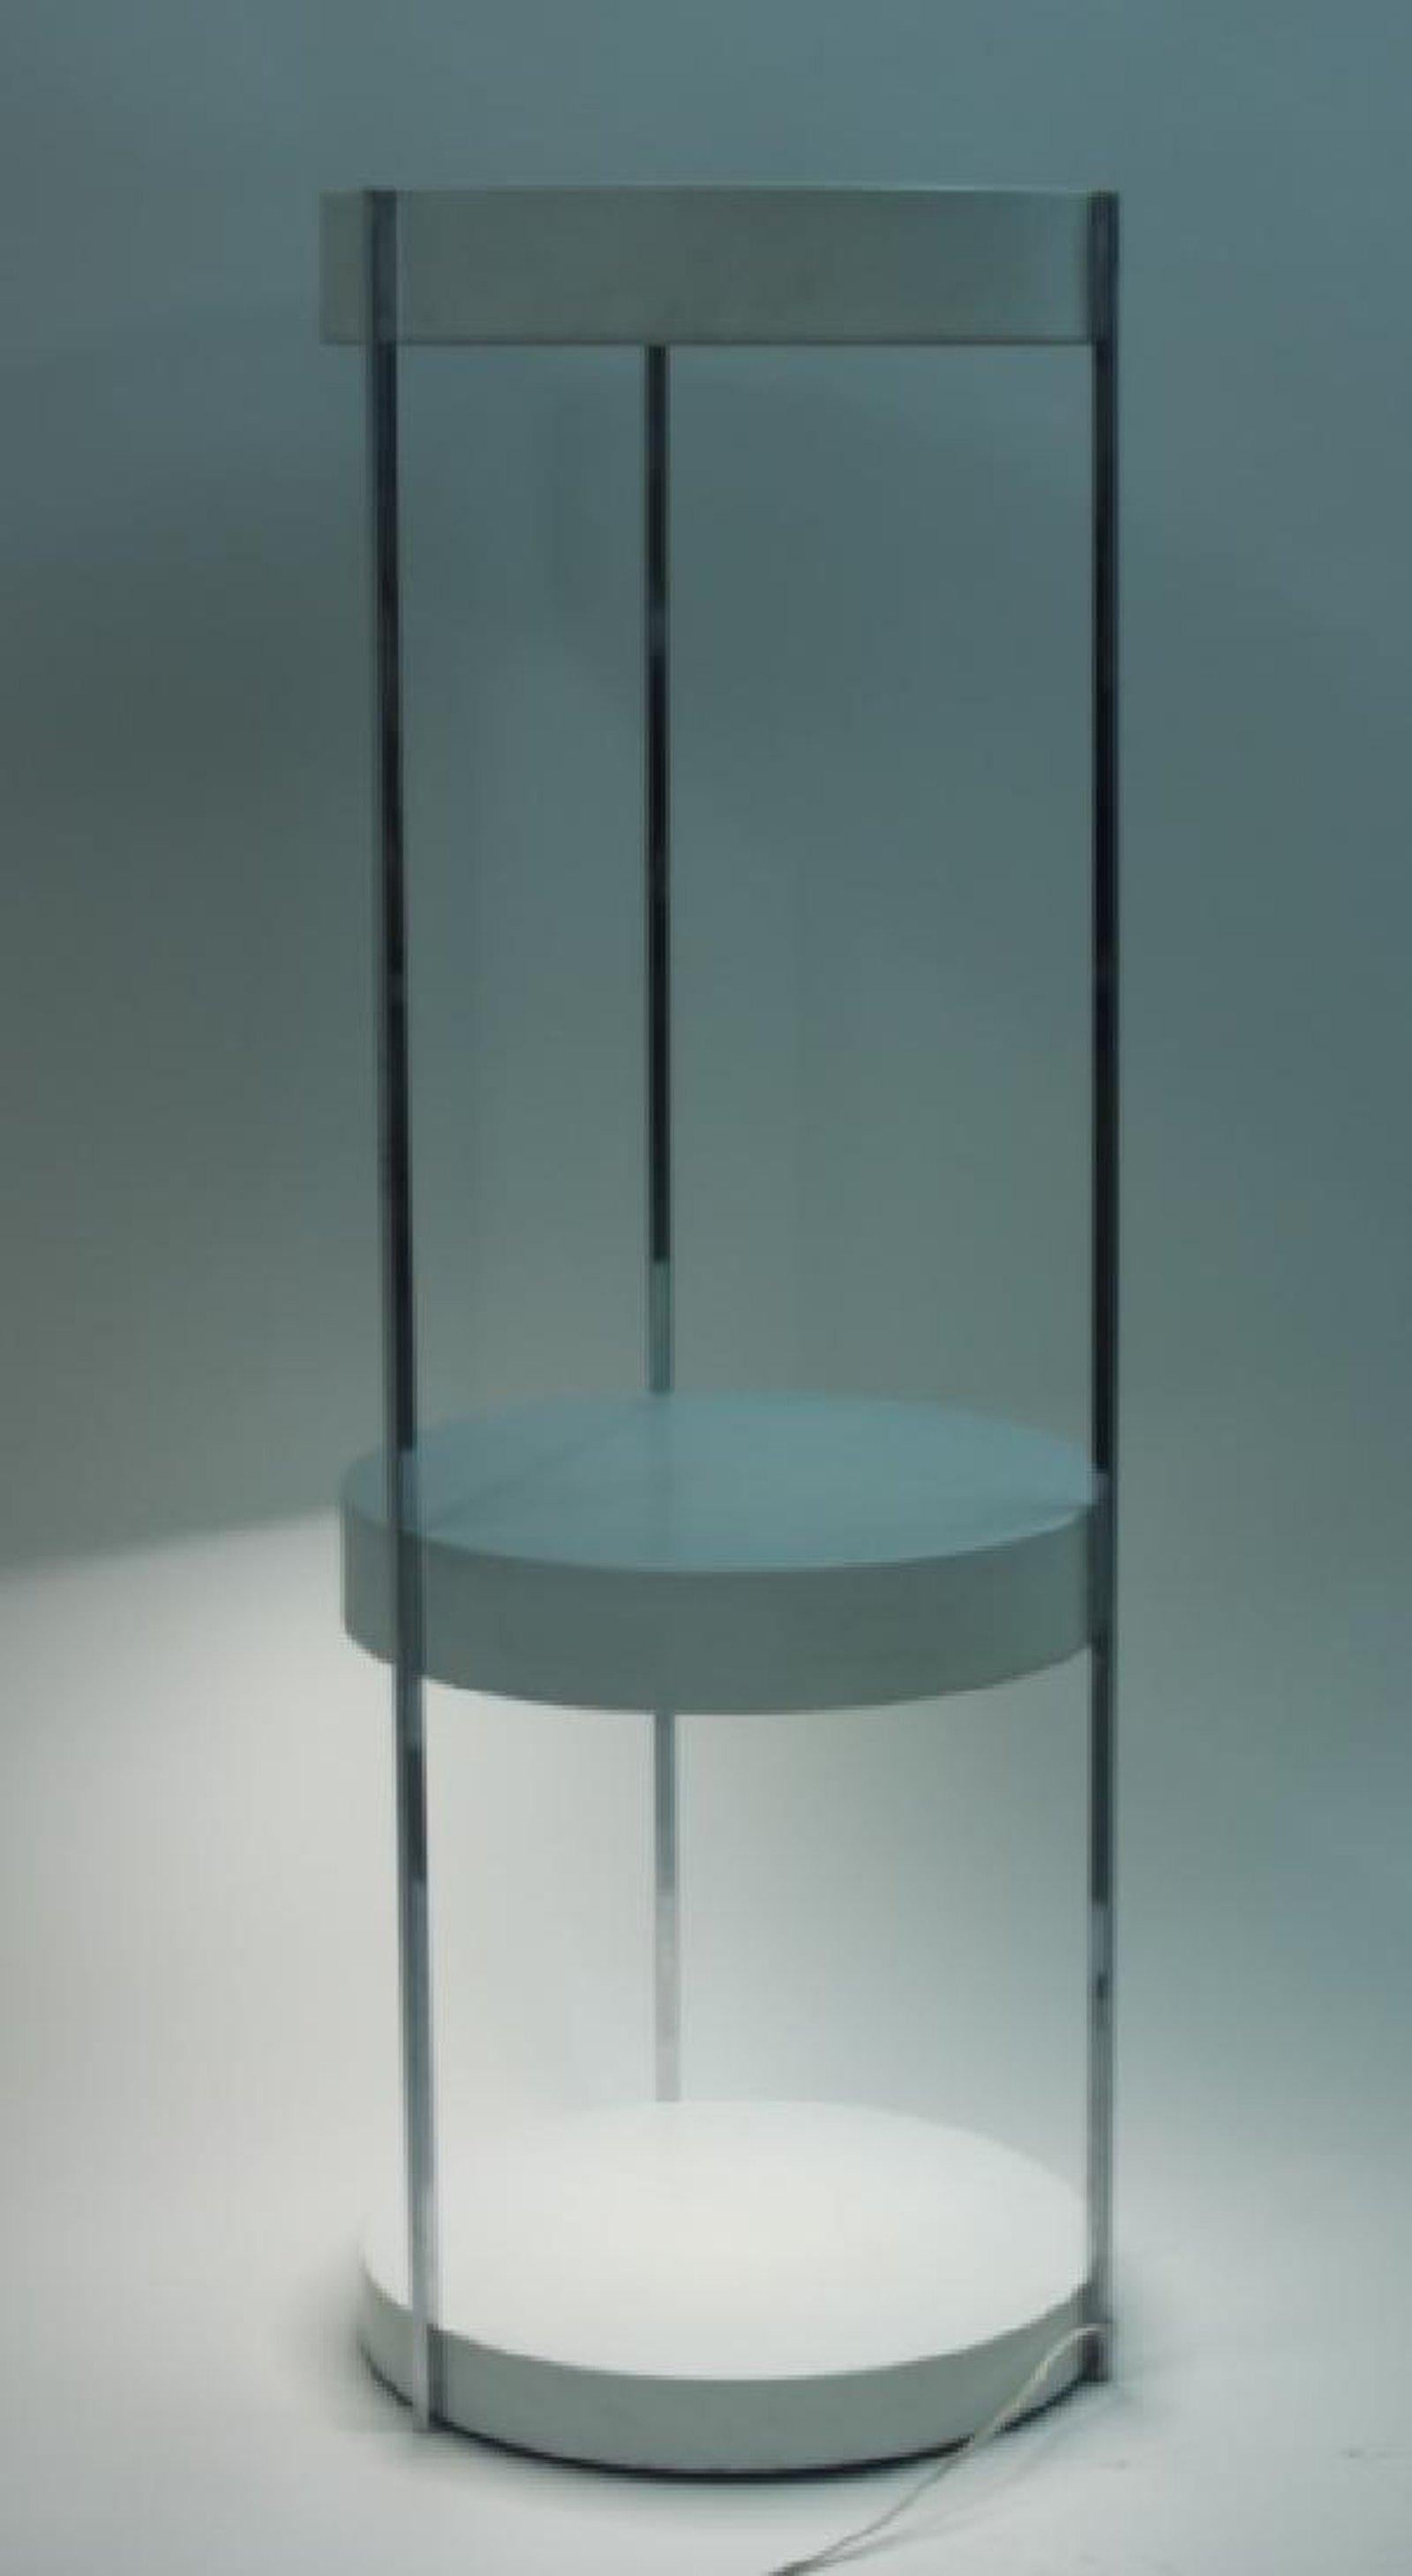 Kovaks Enameled Steel Floor Lamp Shelving & Display Etagere Mid-Century Minimal In Fair Condition For Sale In Brooklyn, NY